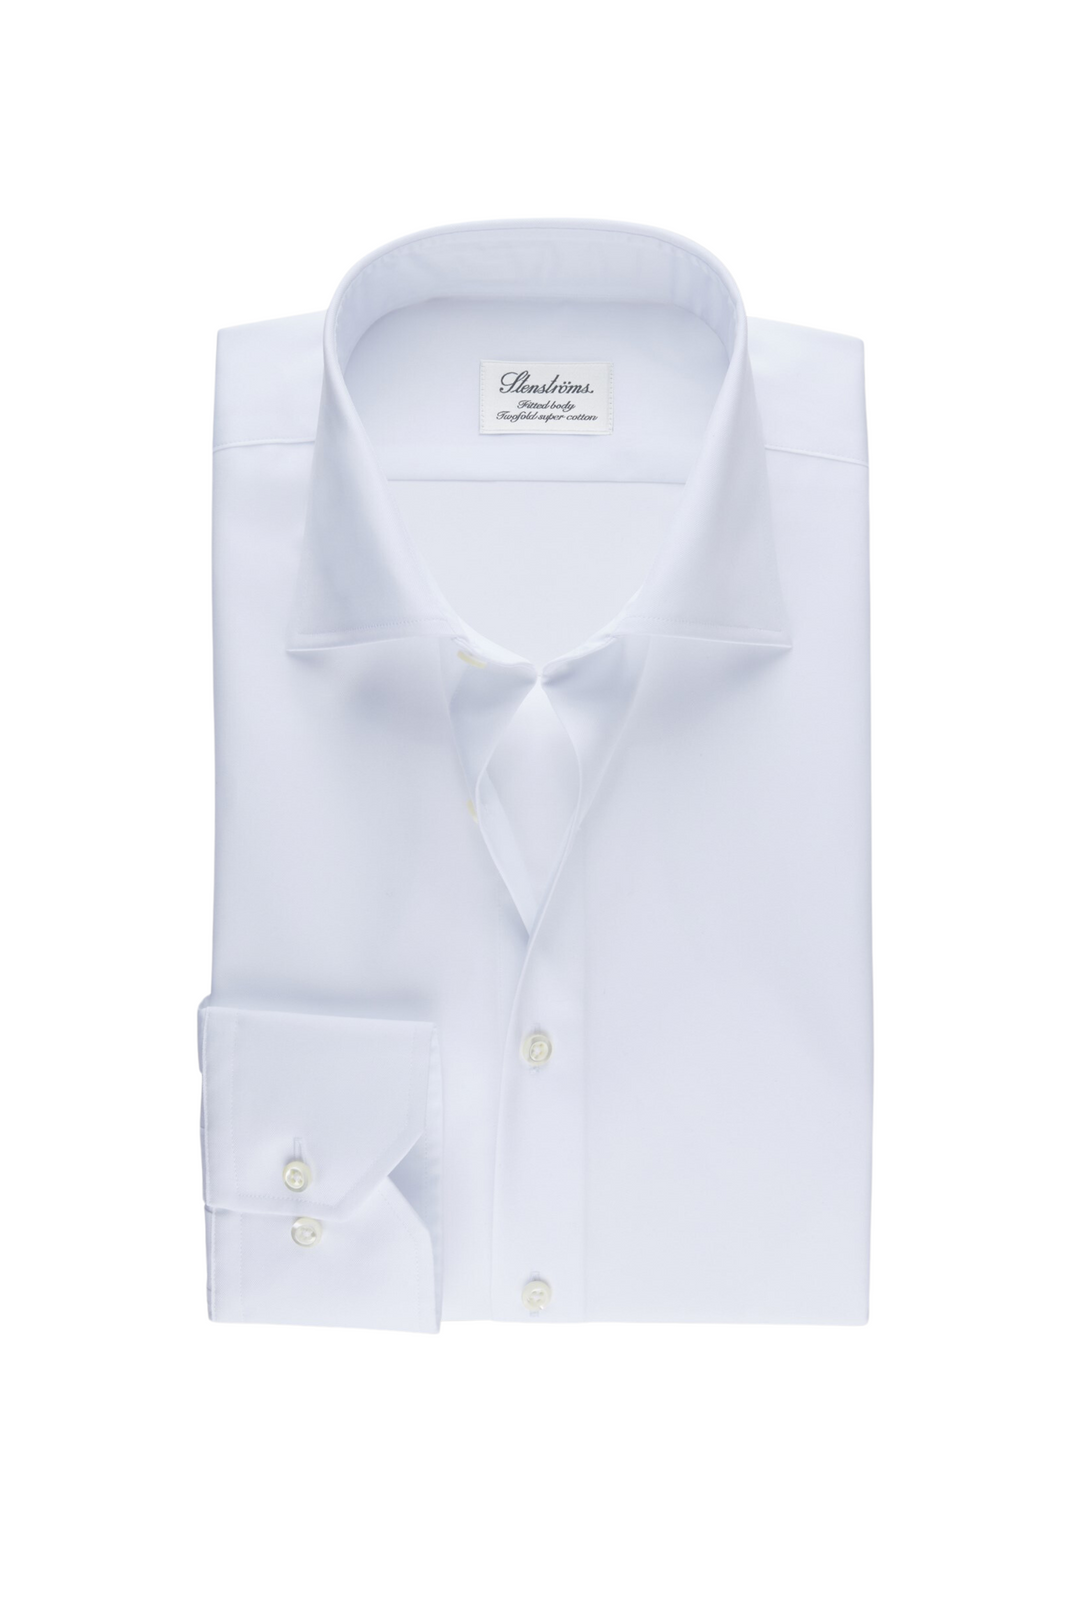 Stenstrom's White Dress Shirt